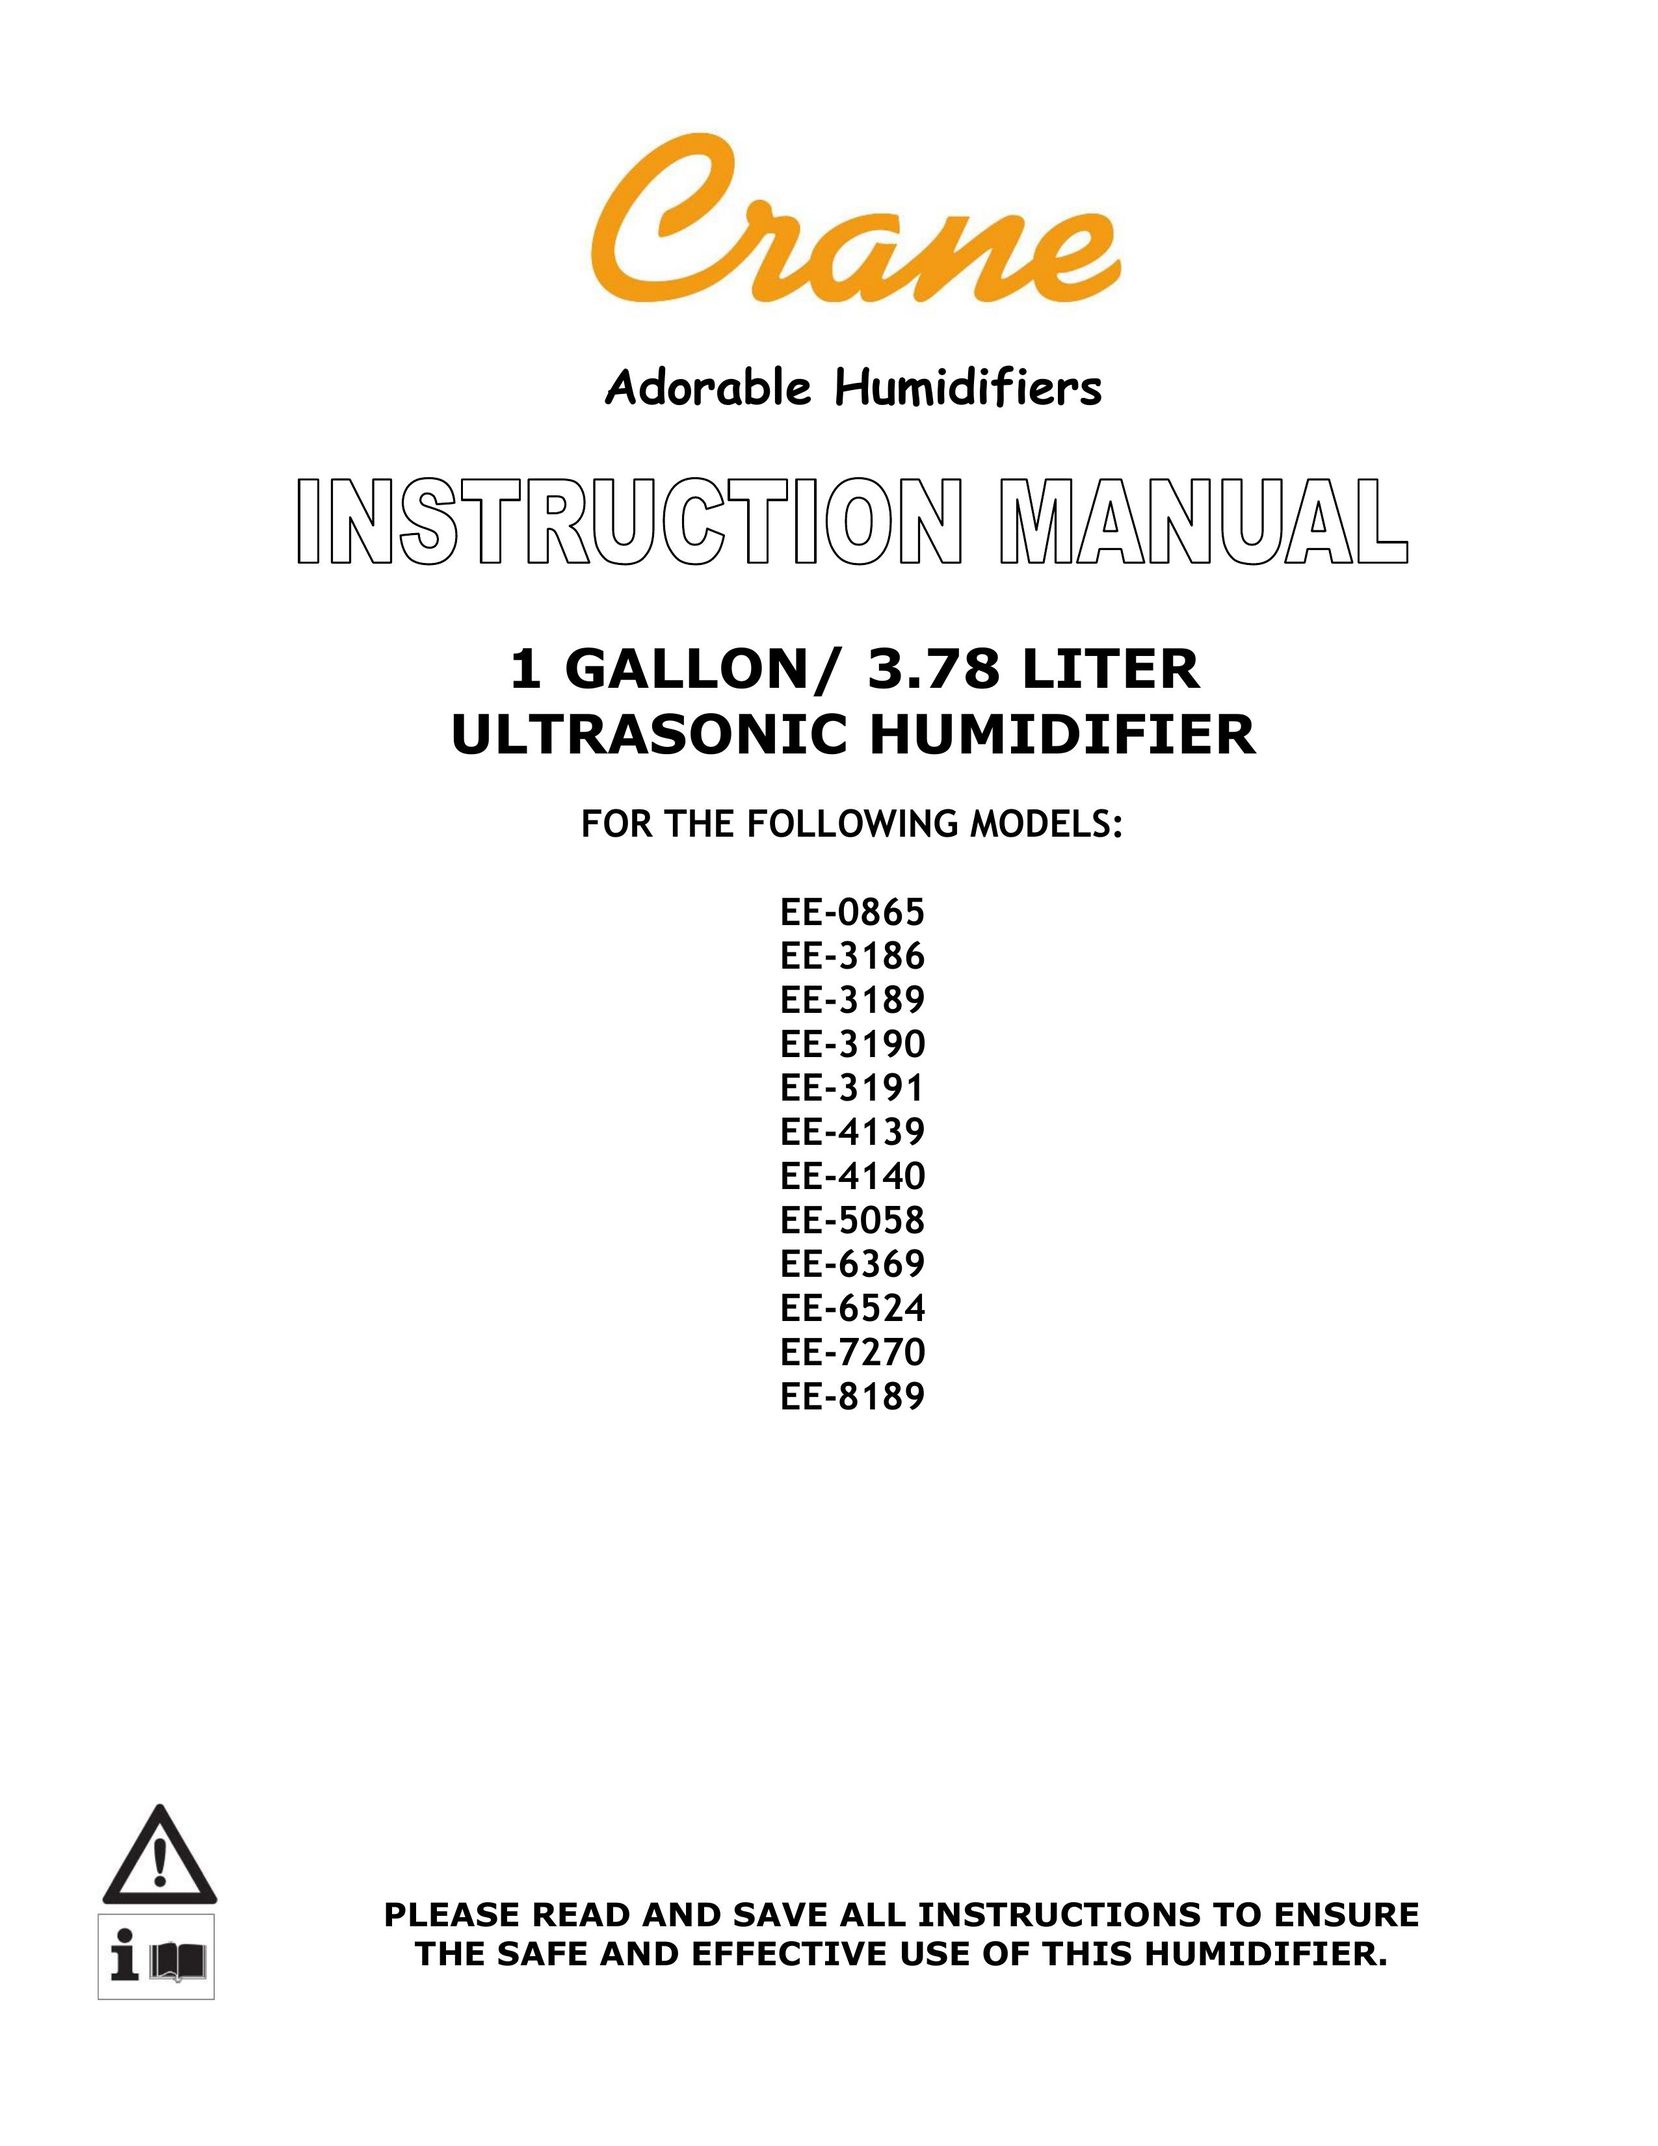 Crane EE-6524 Humidifier User Manual